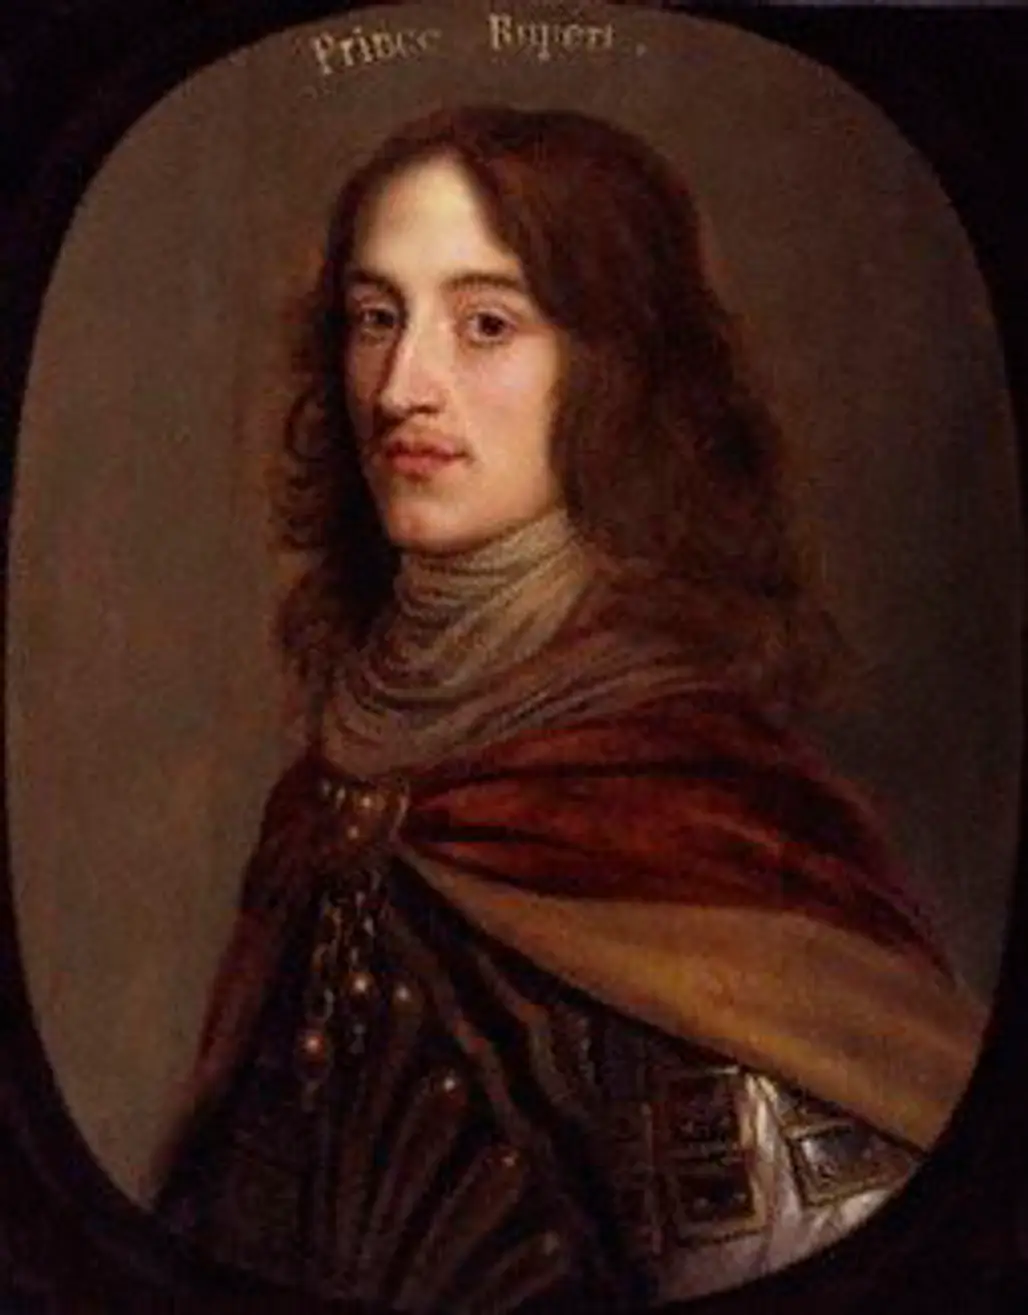 Prince Rupert of the Rhine